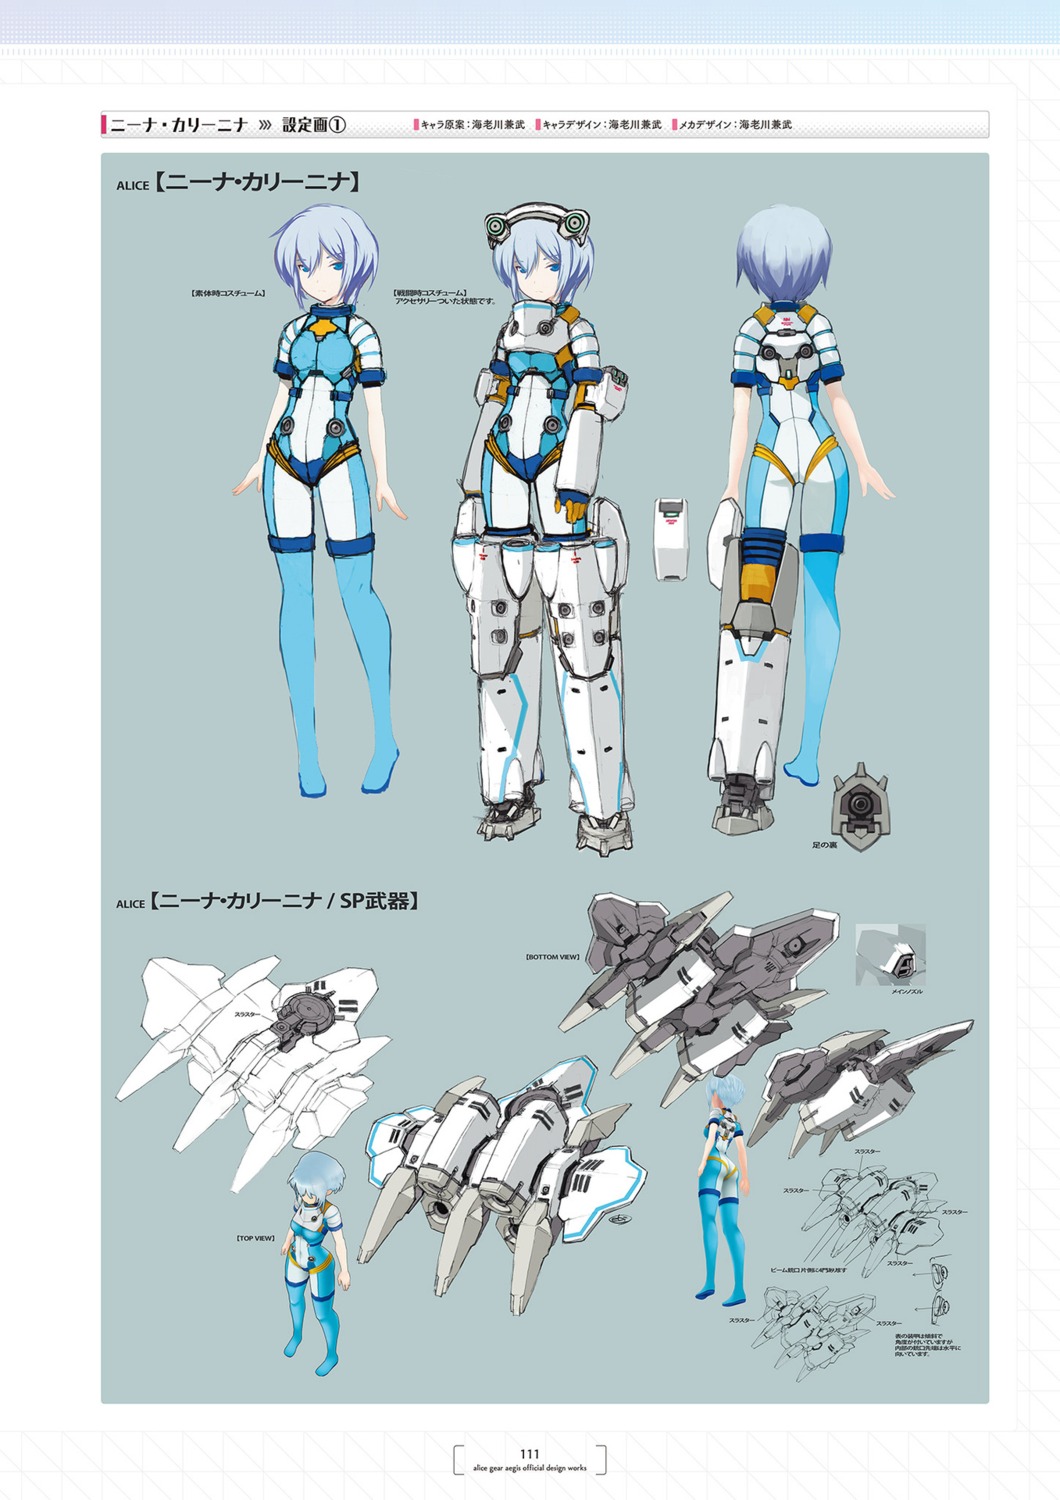 alice_gear_aegis bodysuit character_design ebikawa_kanetake nina_kalinina weapon